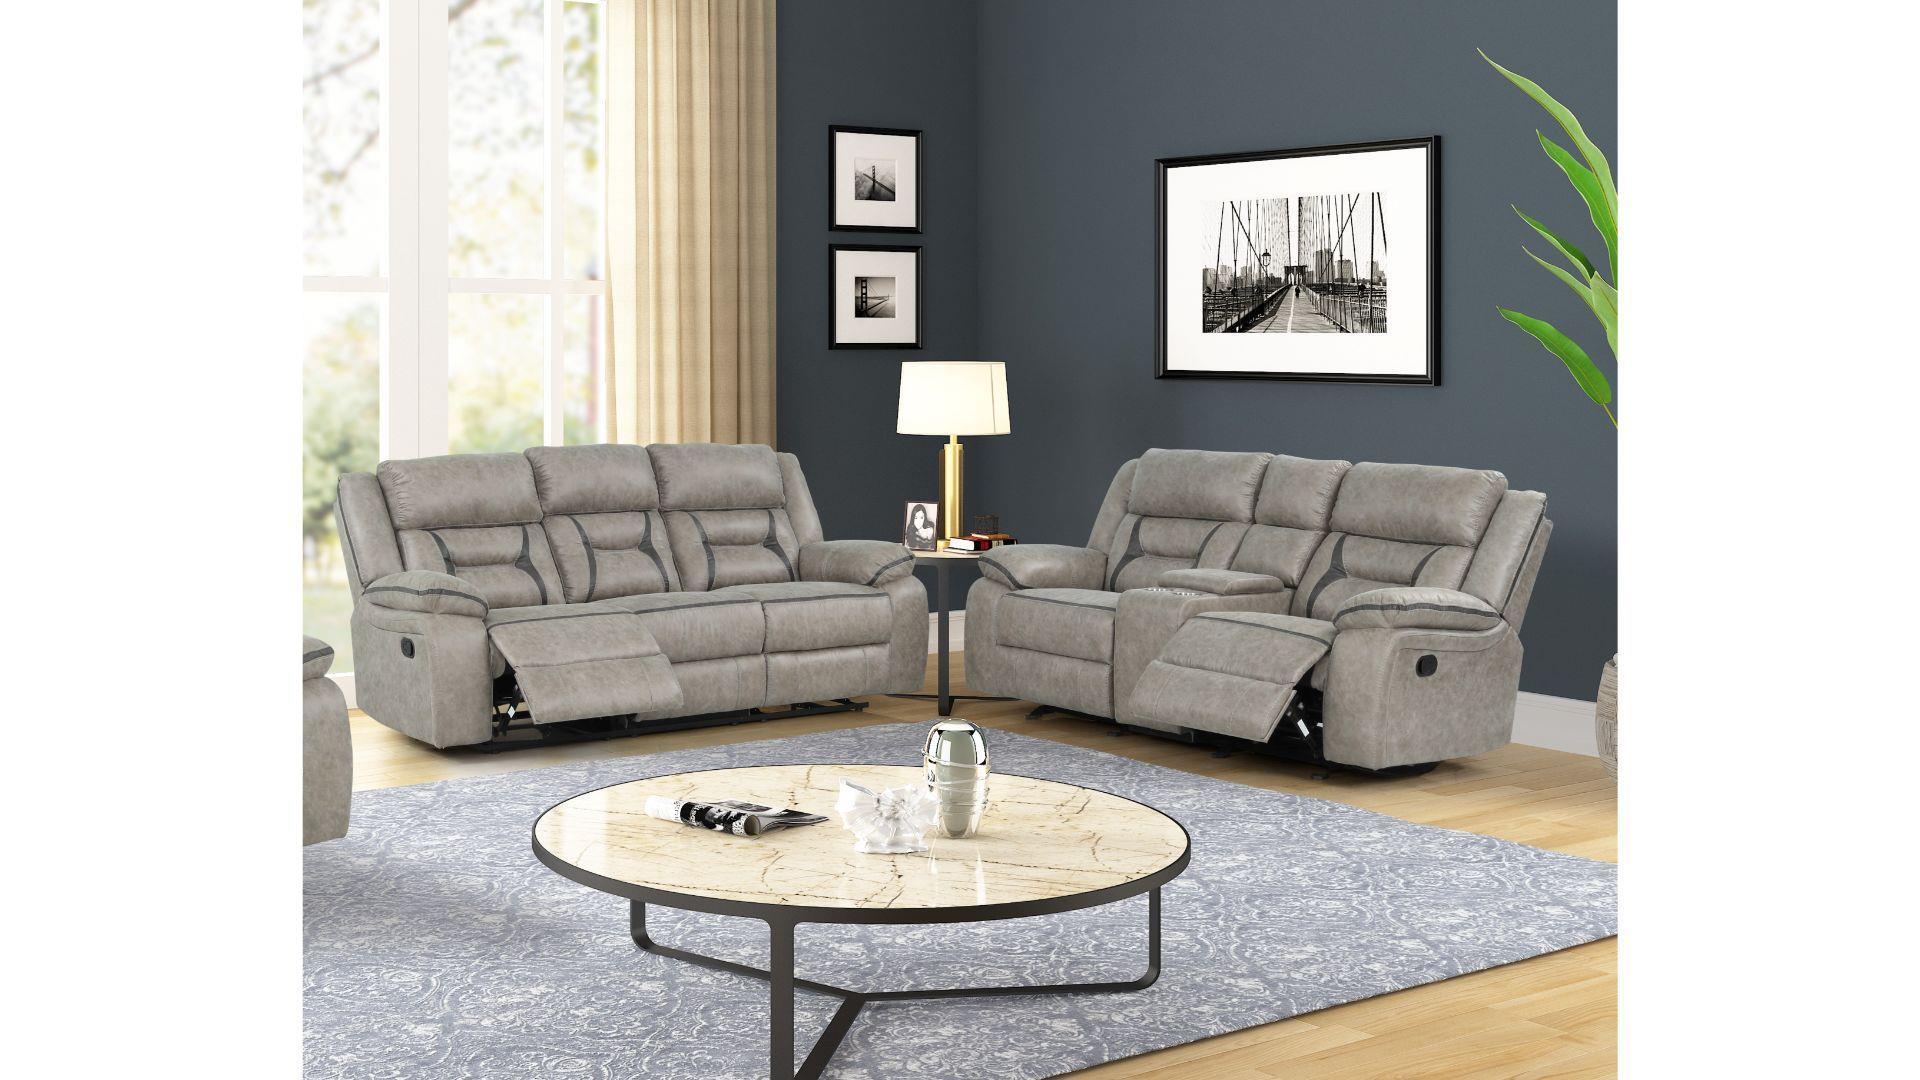 Galaxy Home Furniture DENALI Recliner Sofa Set